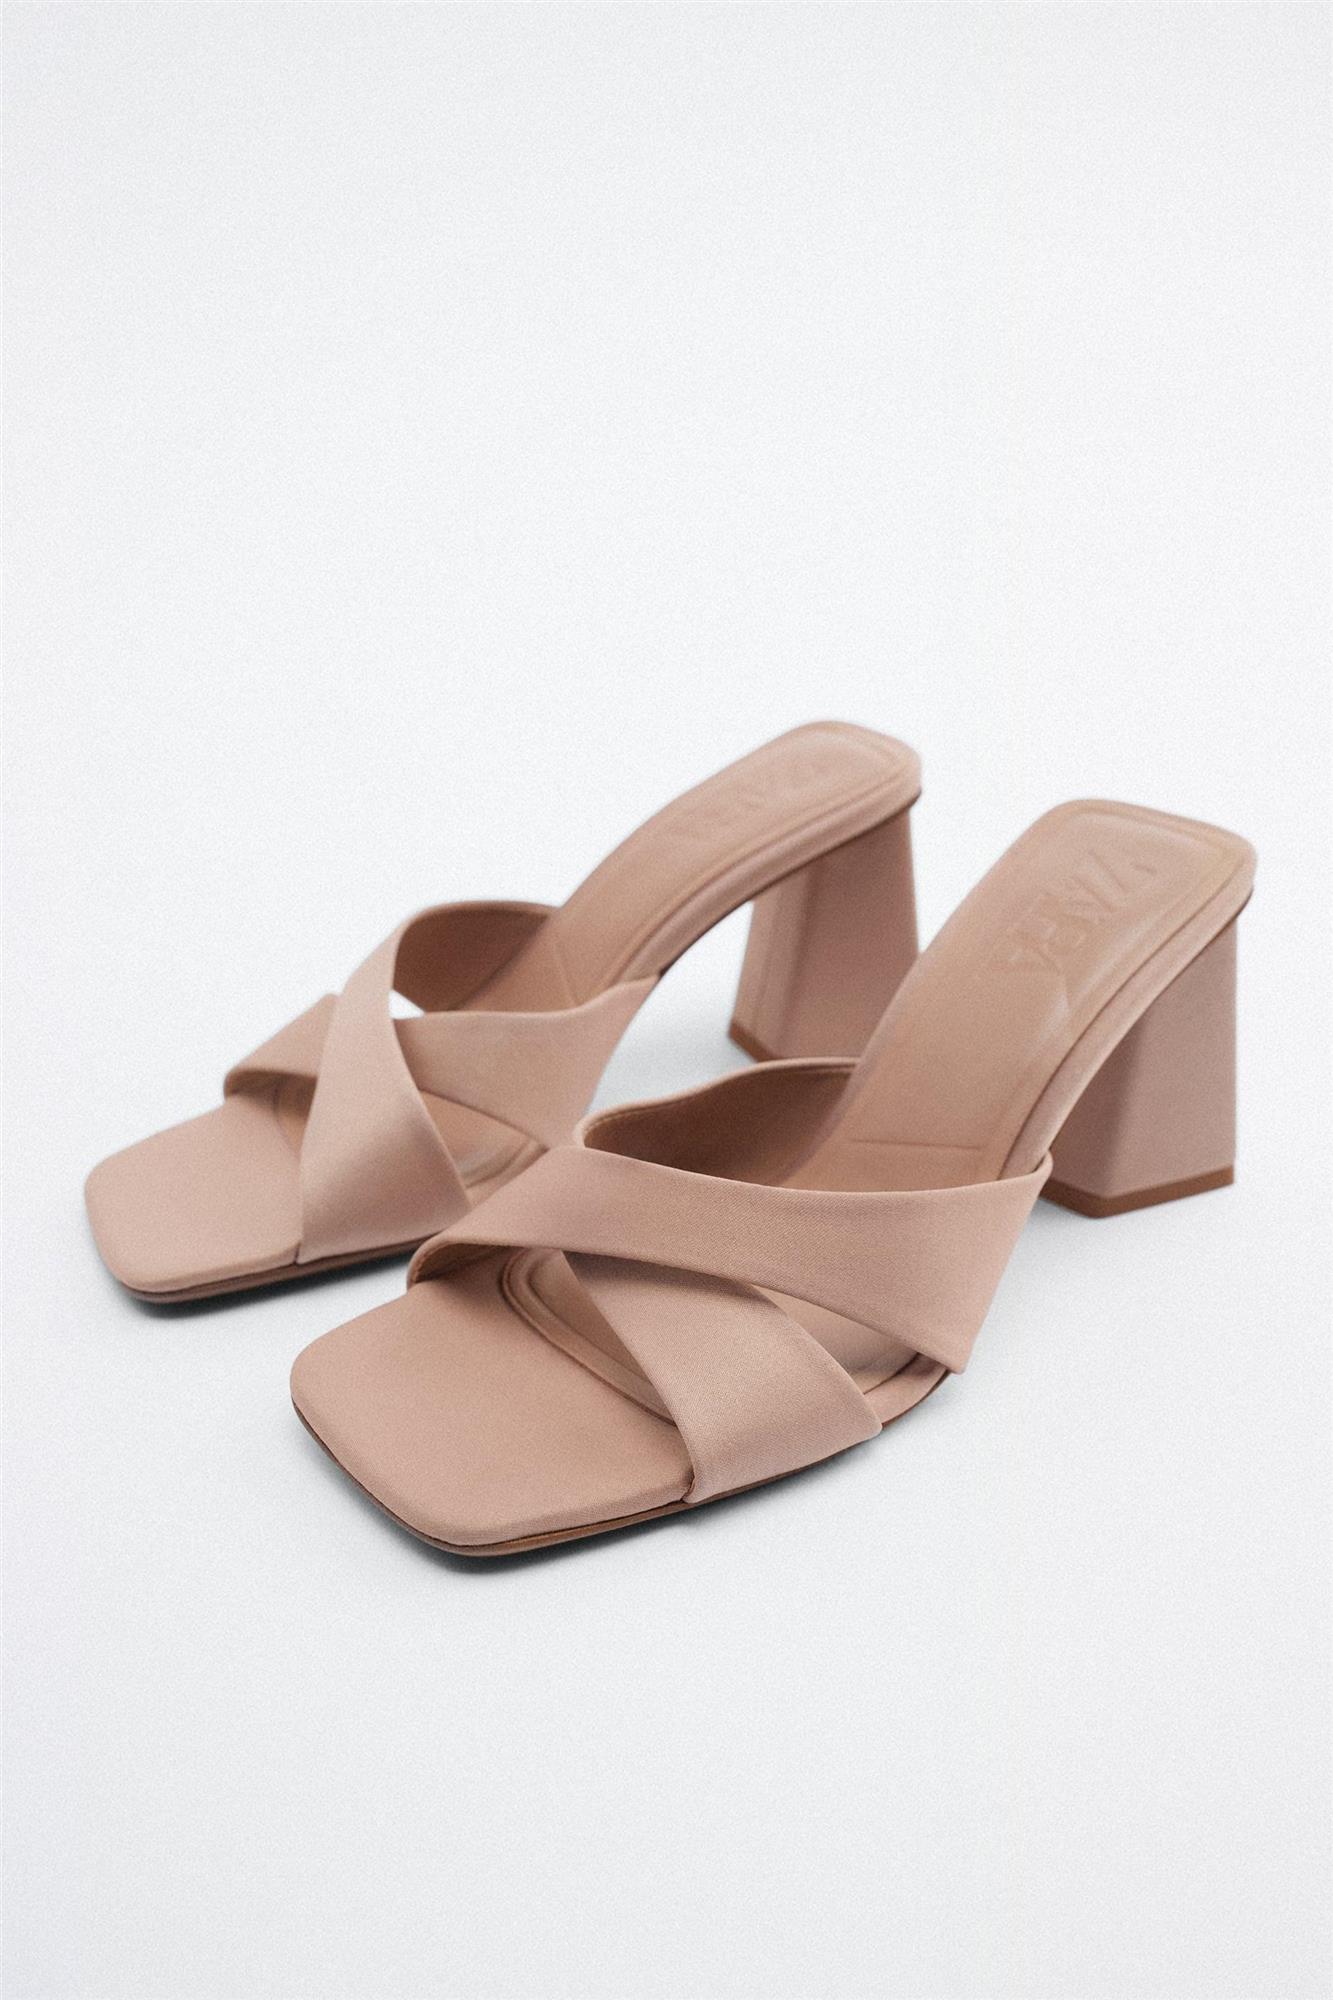 Rebajas Zara verano 2022, sandalias de tacón ancho